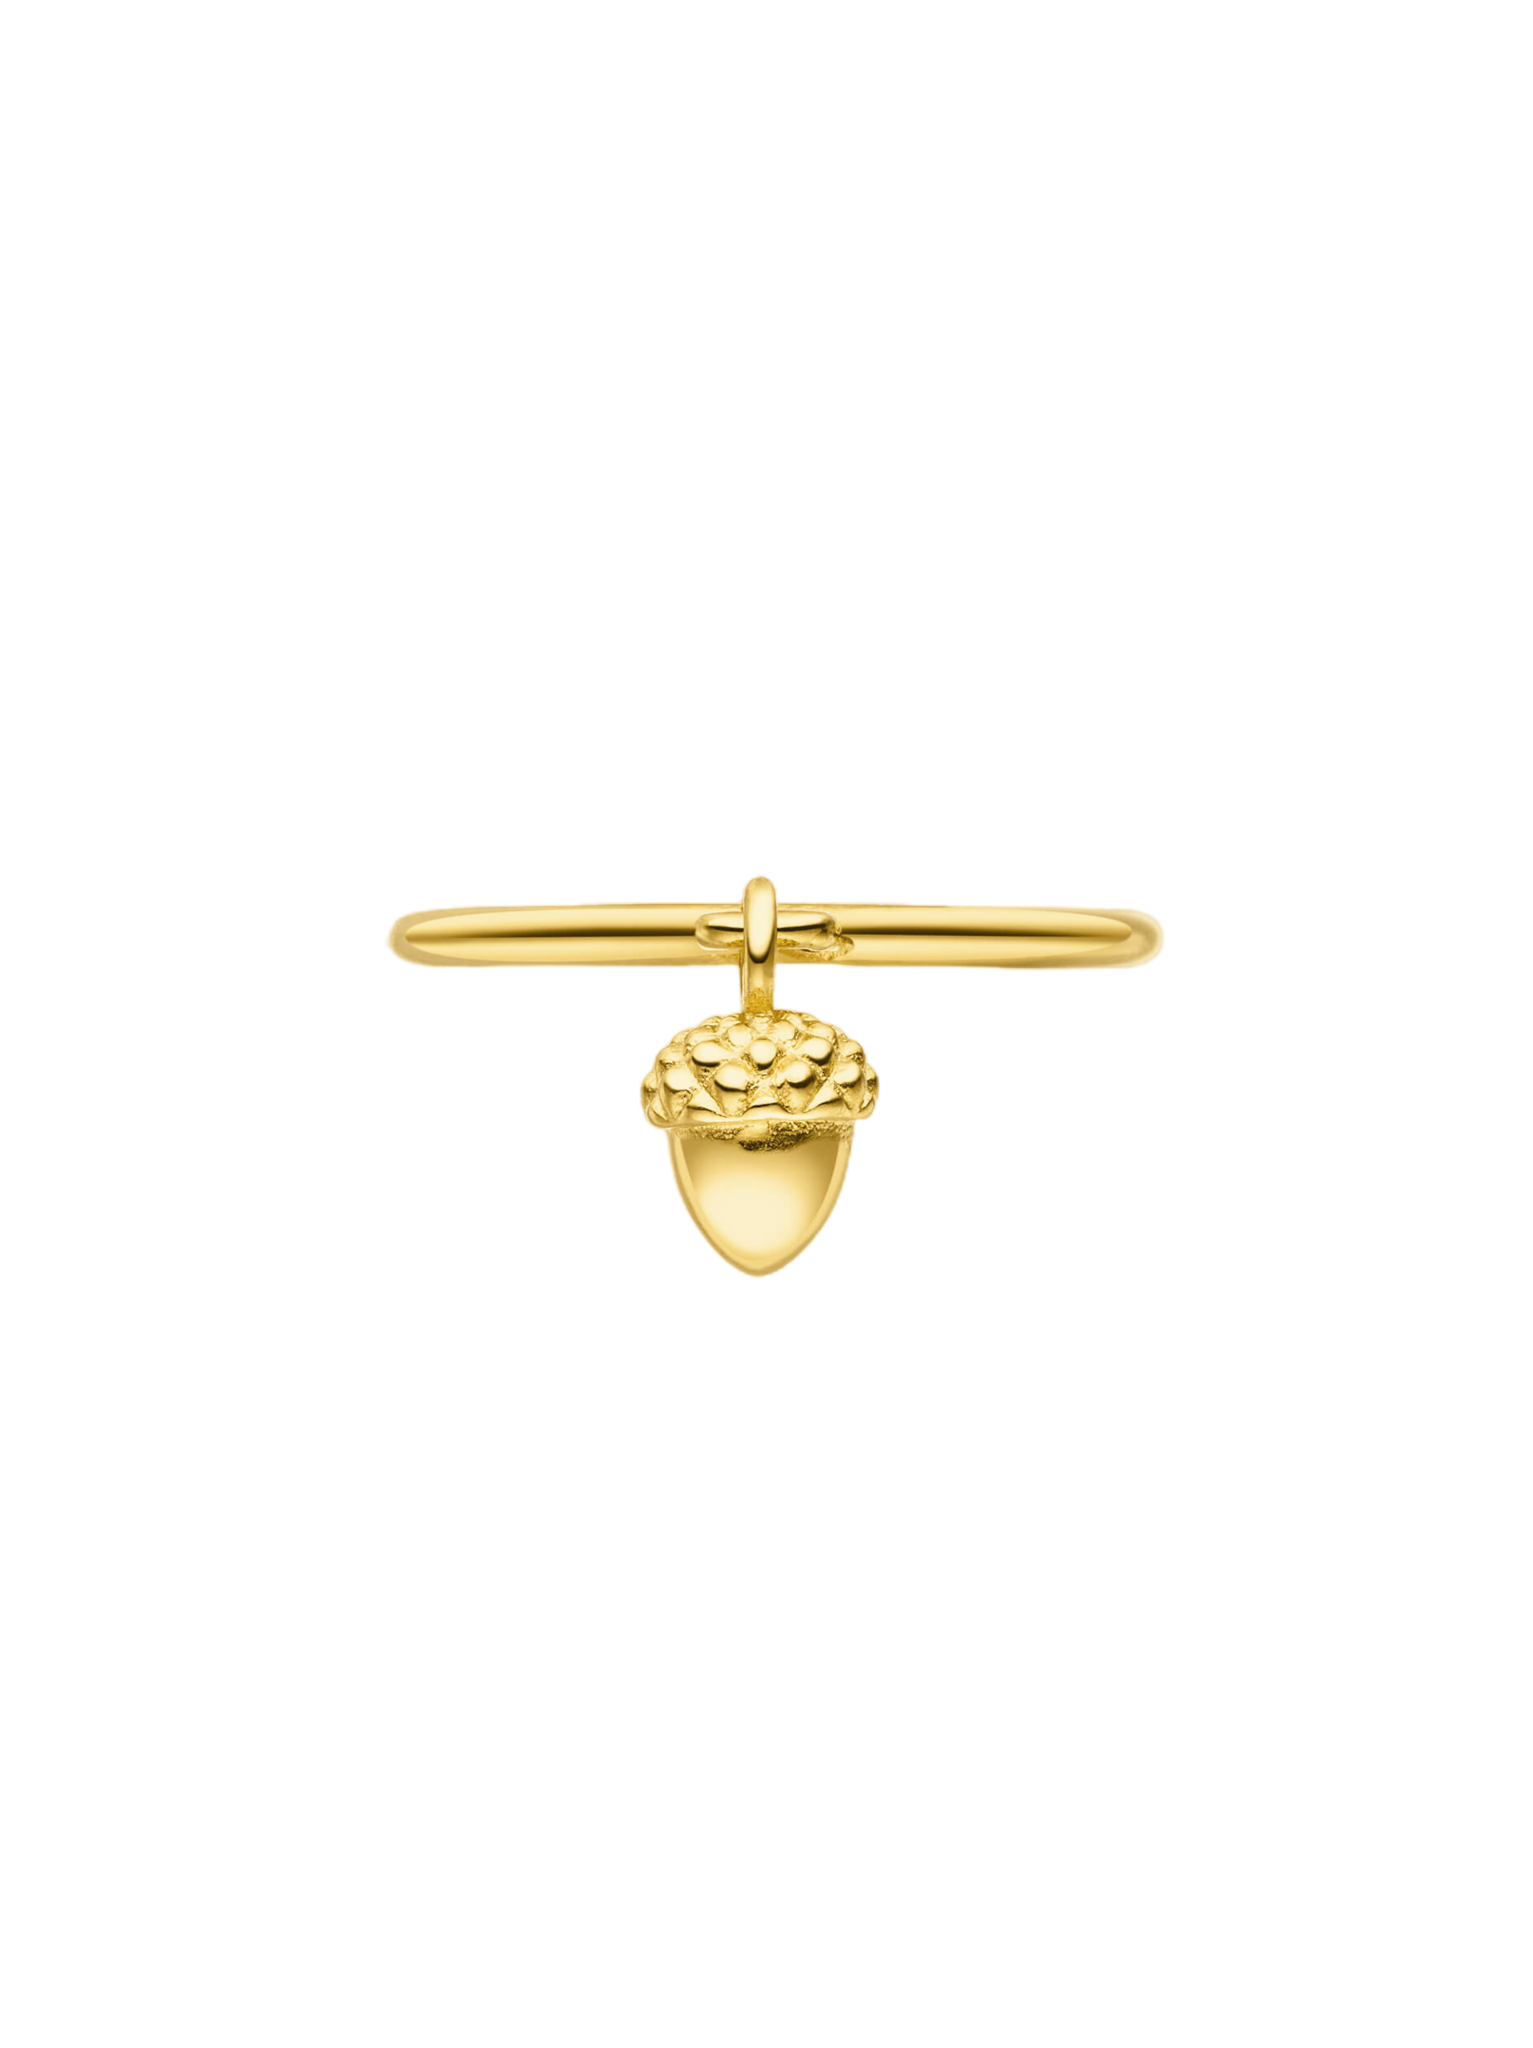 Acorn charm ring 18k